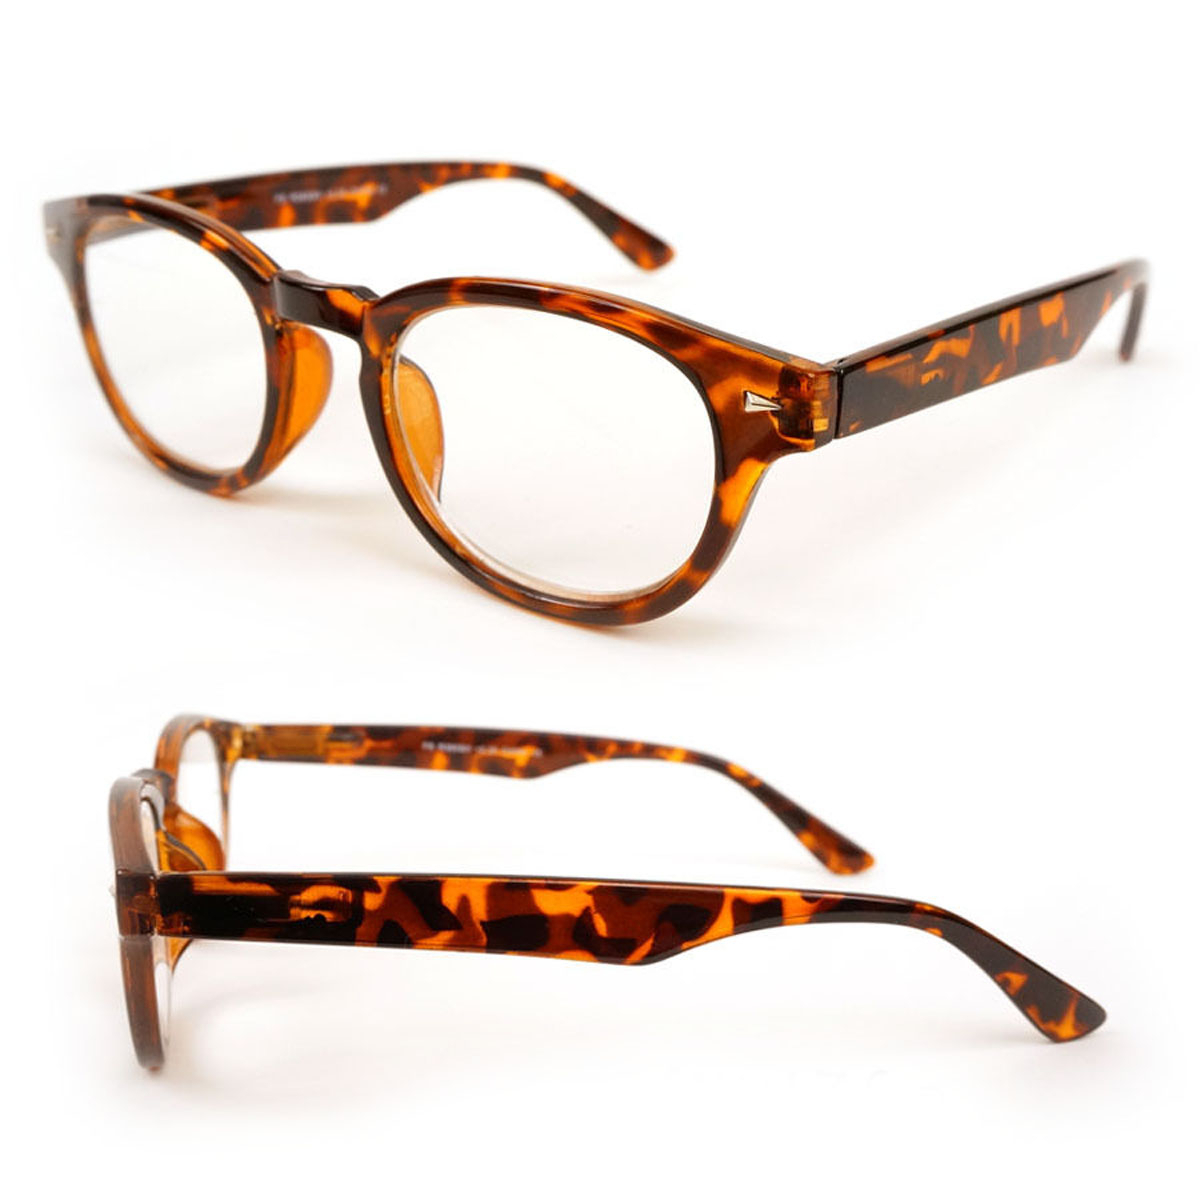 Medium Round Classic Frame Reading Glasses Geek Retro Vintage Style 100-375 - Brown, +3.50